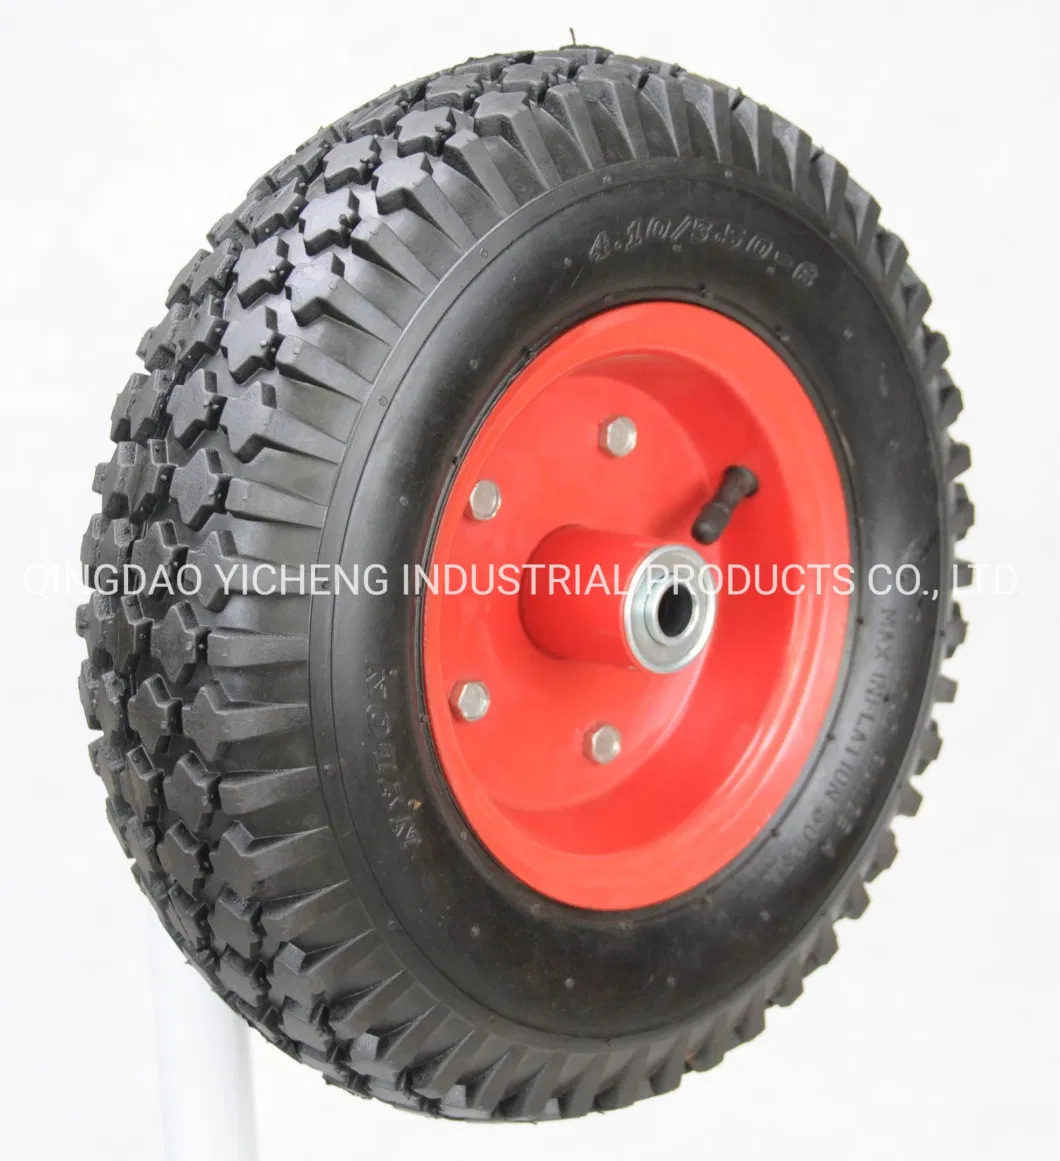 High Quality Diamond Tyre 13X3.50-6 Wheelbarrow Wheel for Lawn Mower and Wheelbarrow